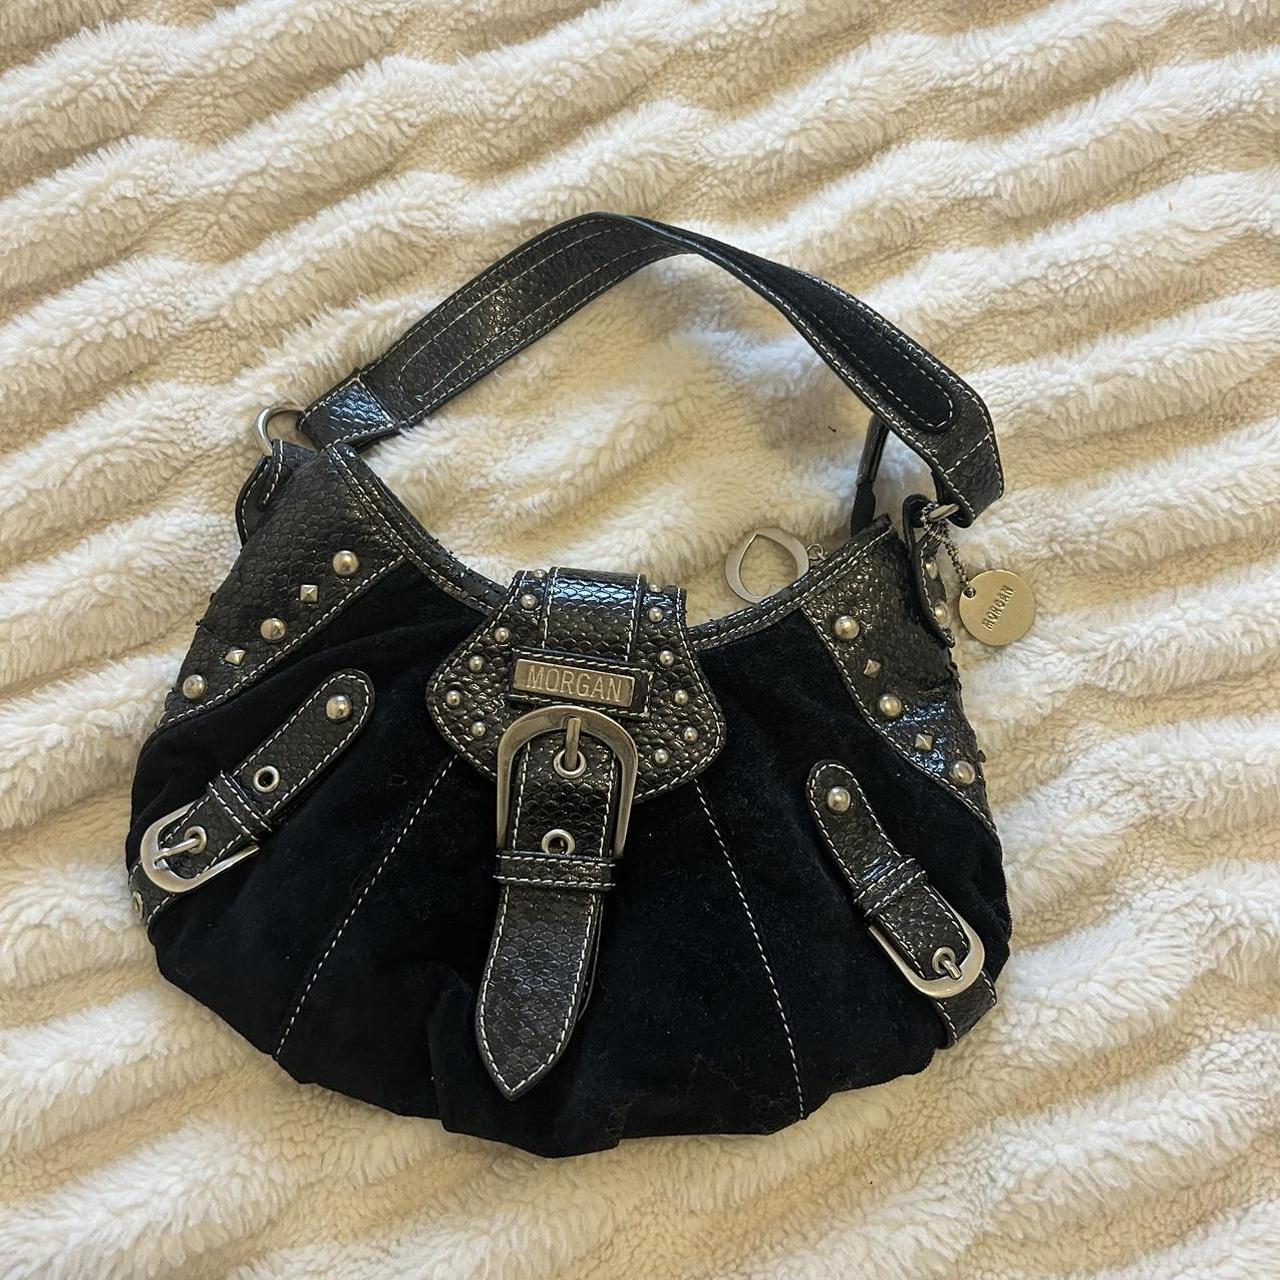 90s vintage bag inside zipper is broken with the... - Depop